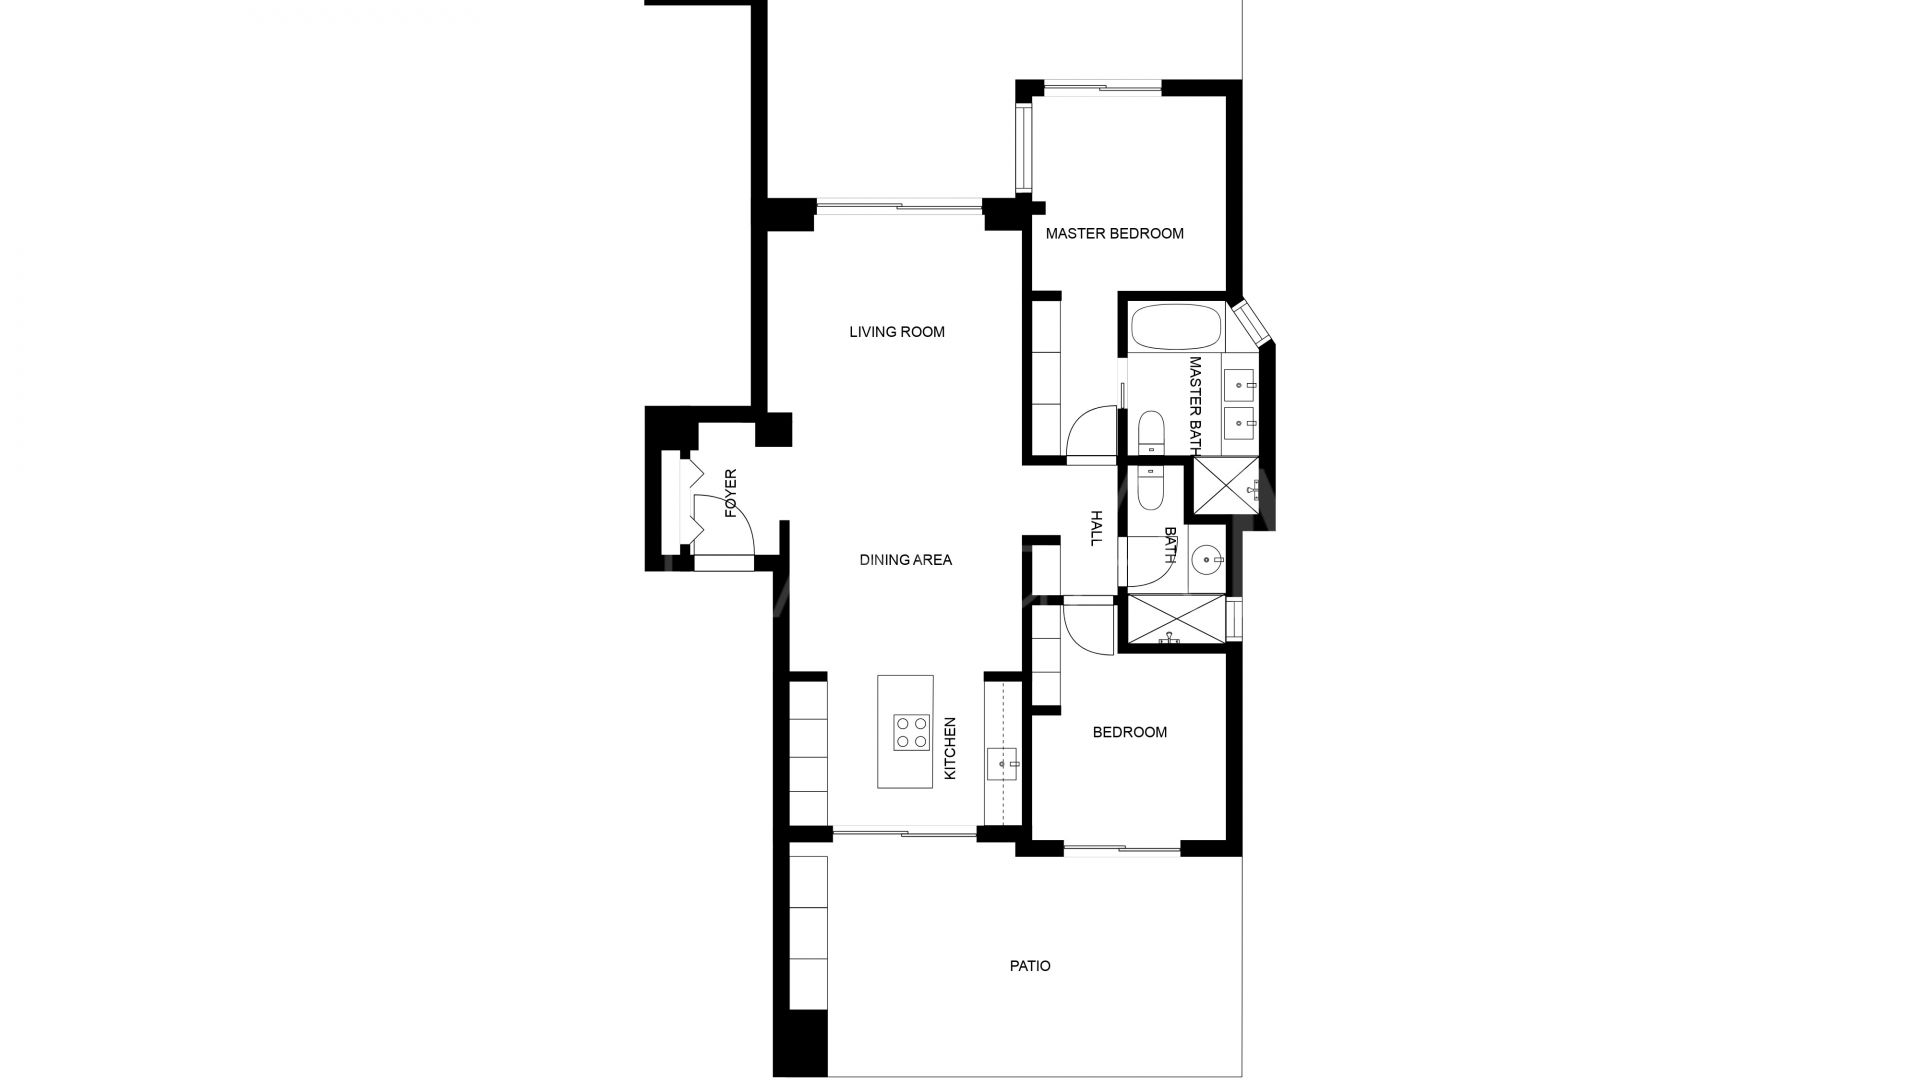 Ground floor apartment for sale in Benahavis with 2 bedrooms